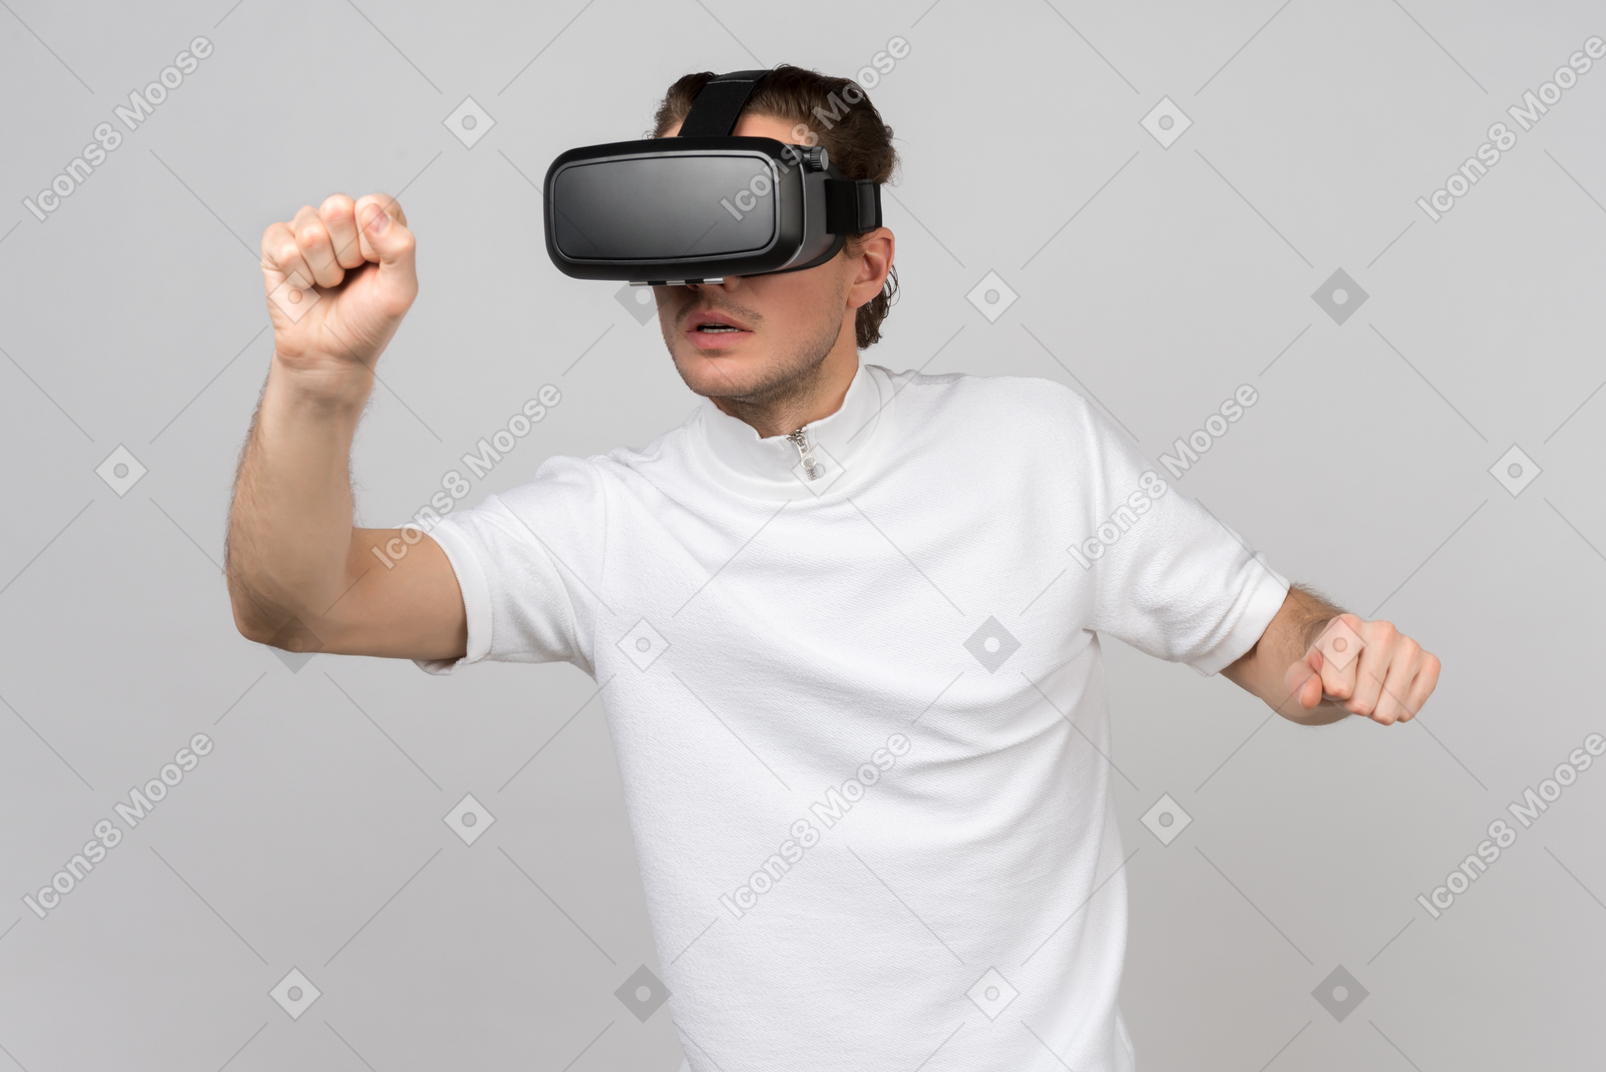 Mann im virtual-reality-headset spielt kampfspiel